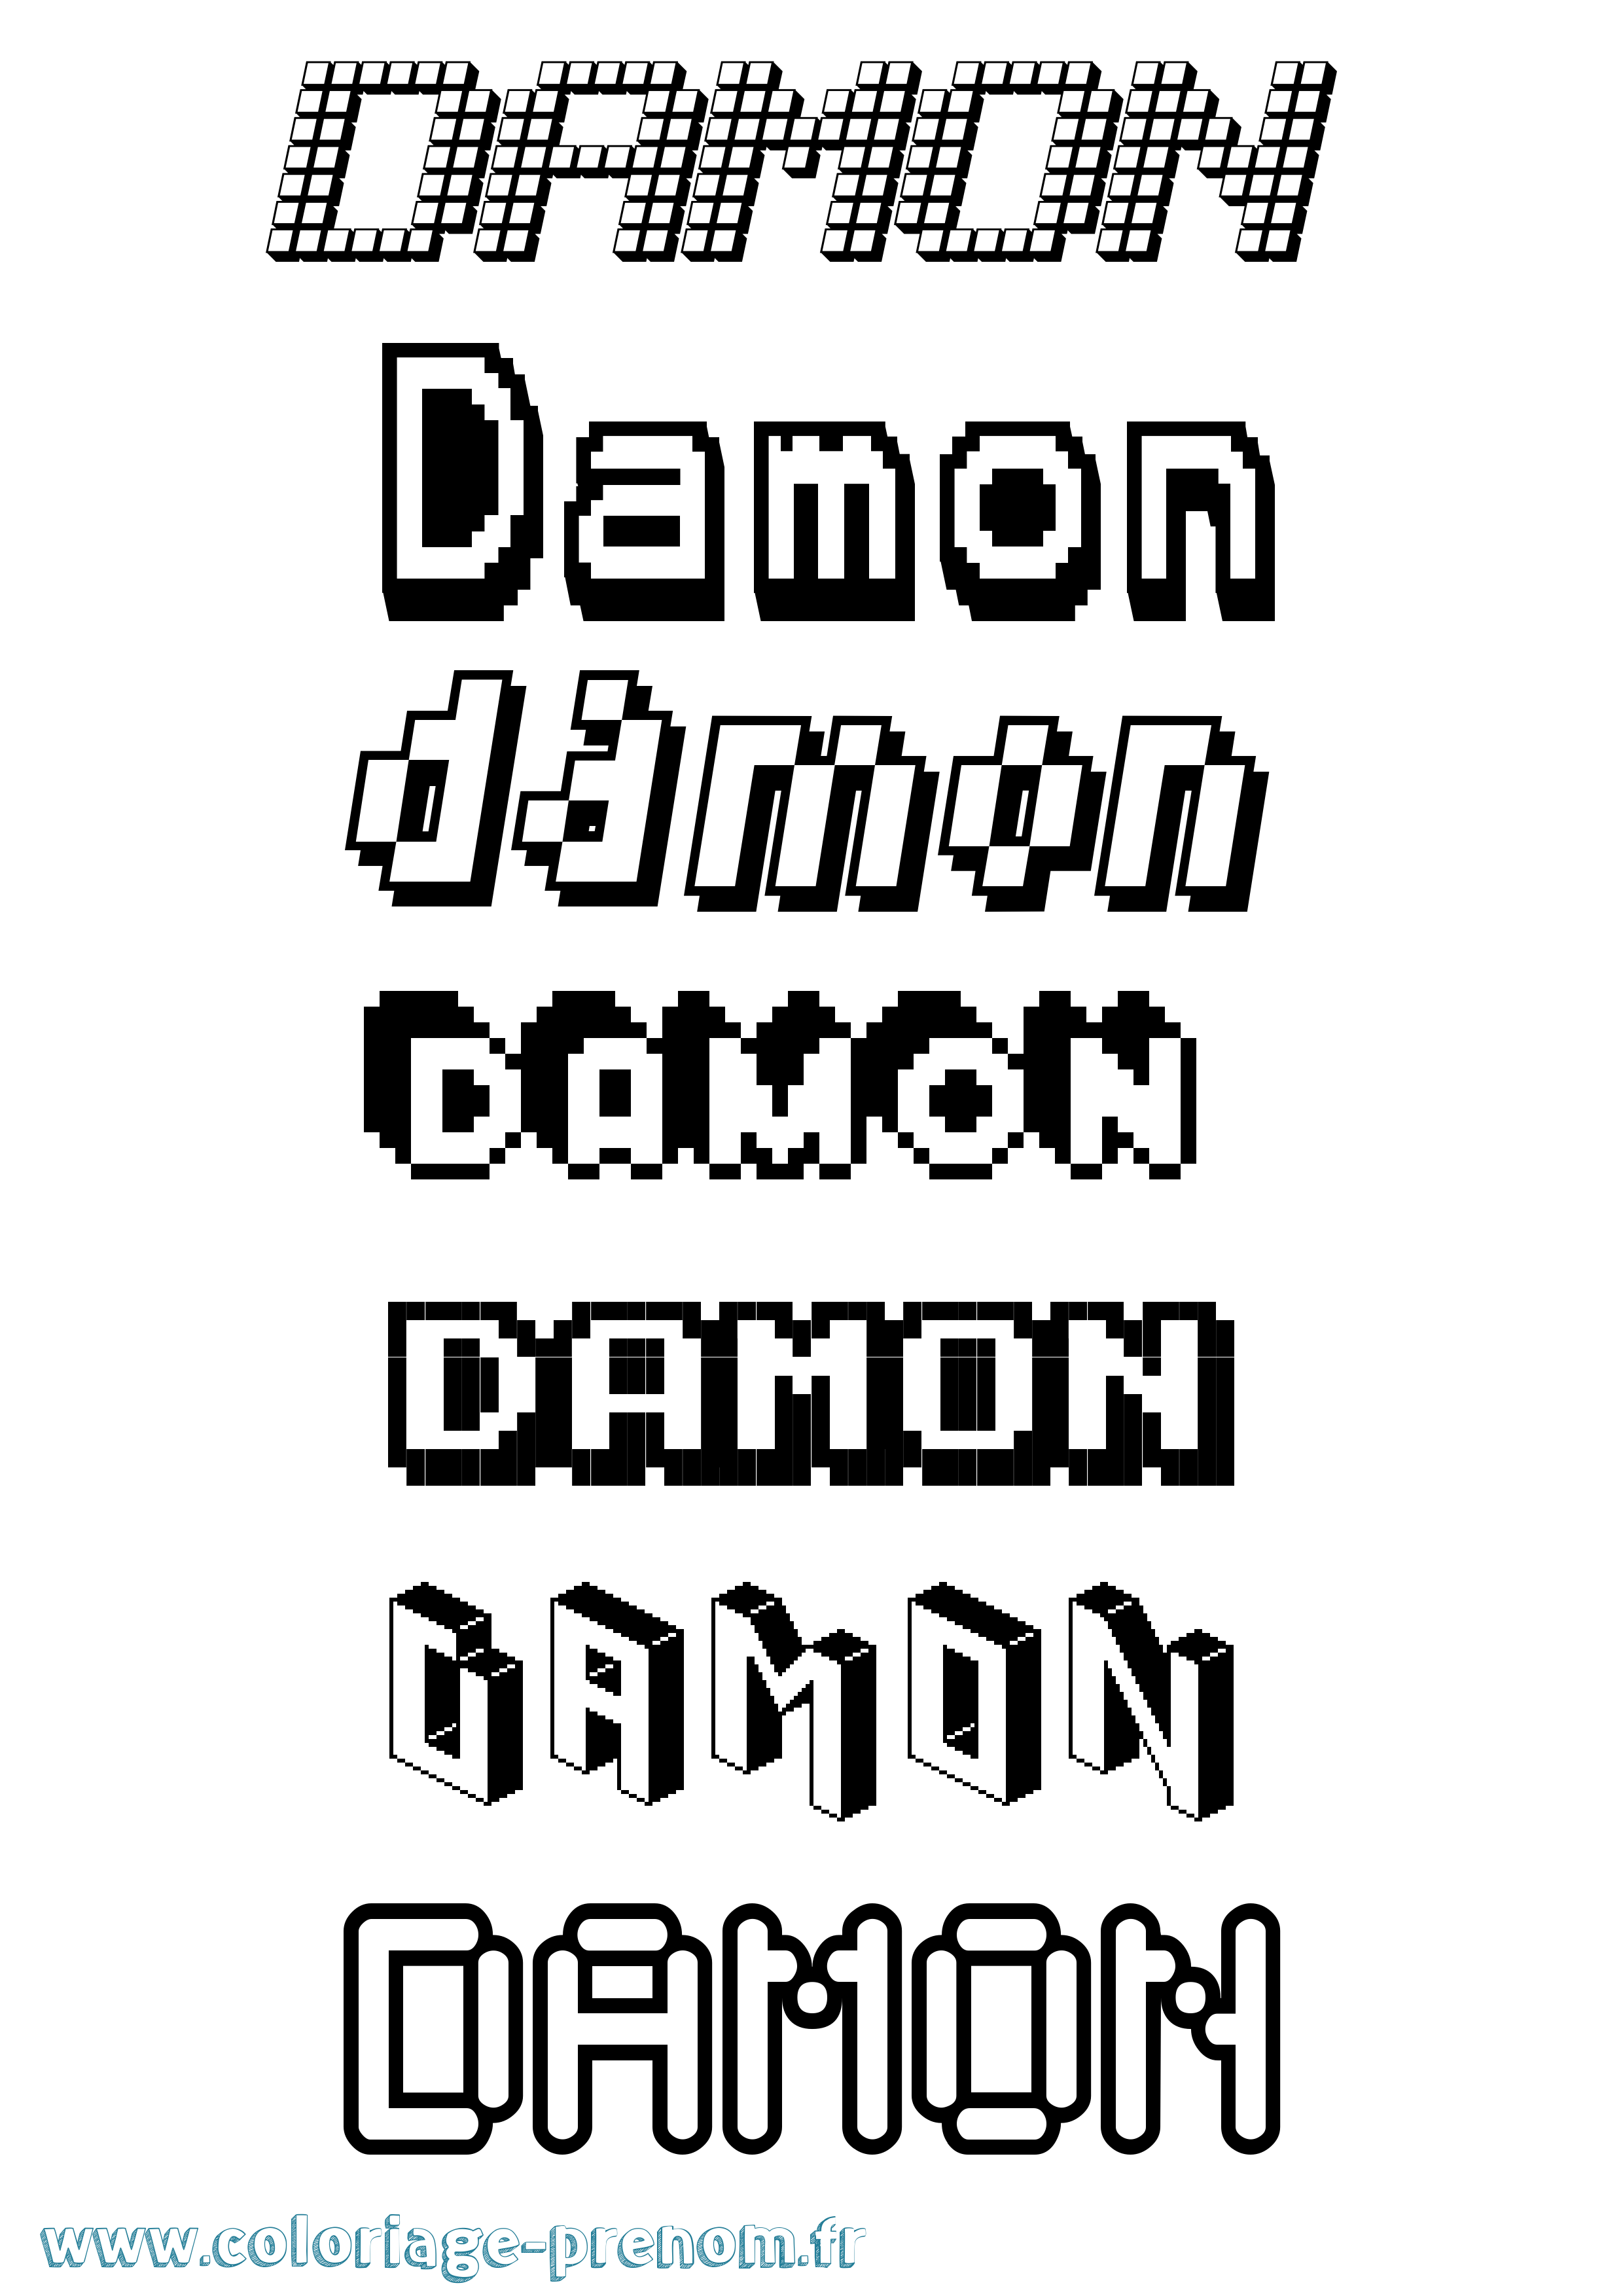 Coloriage prénom Damon Pixel